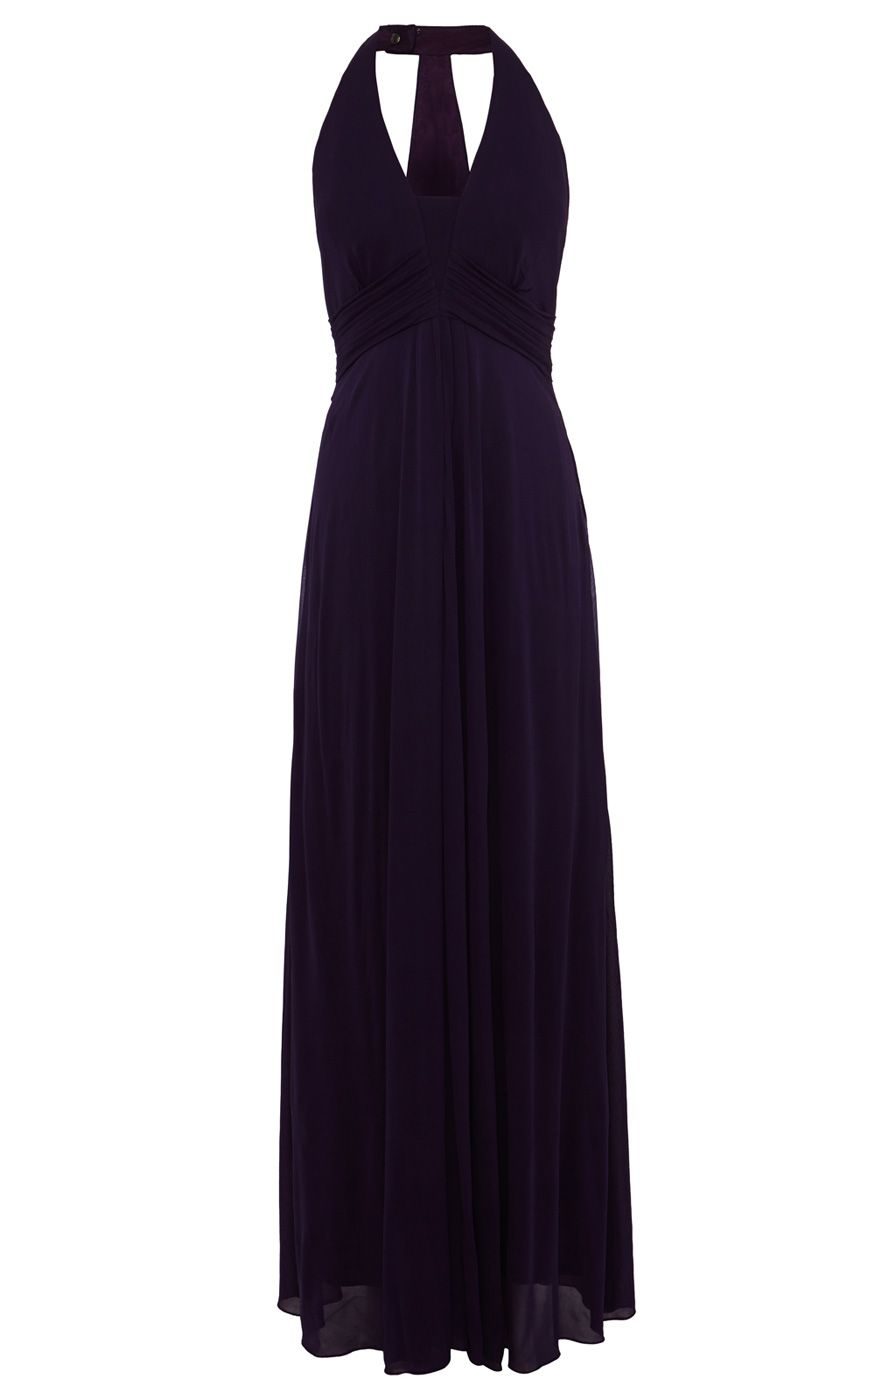 Karen Millen Jersey Maxi Dress in Purple - Lyst